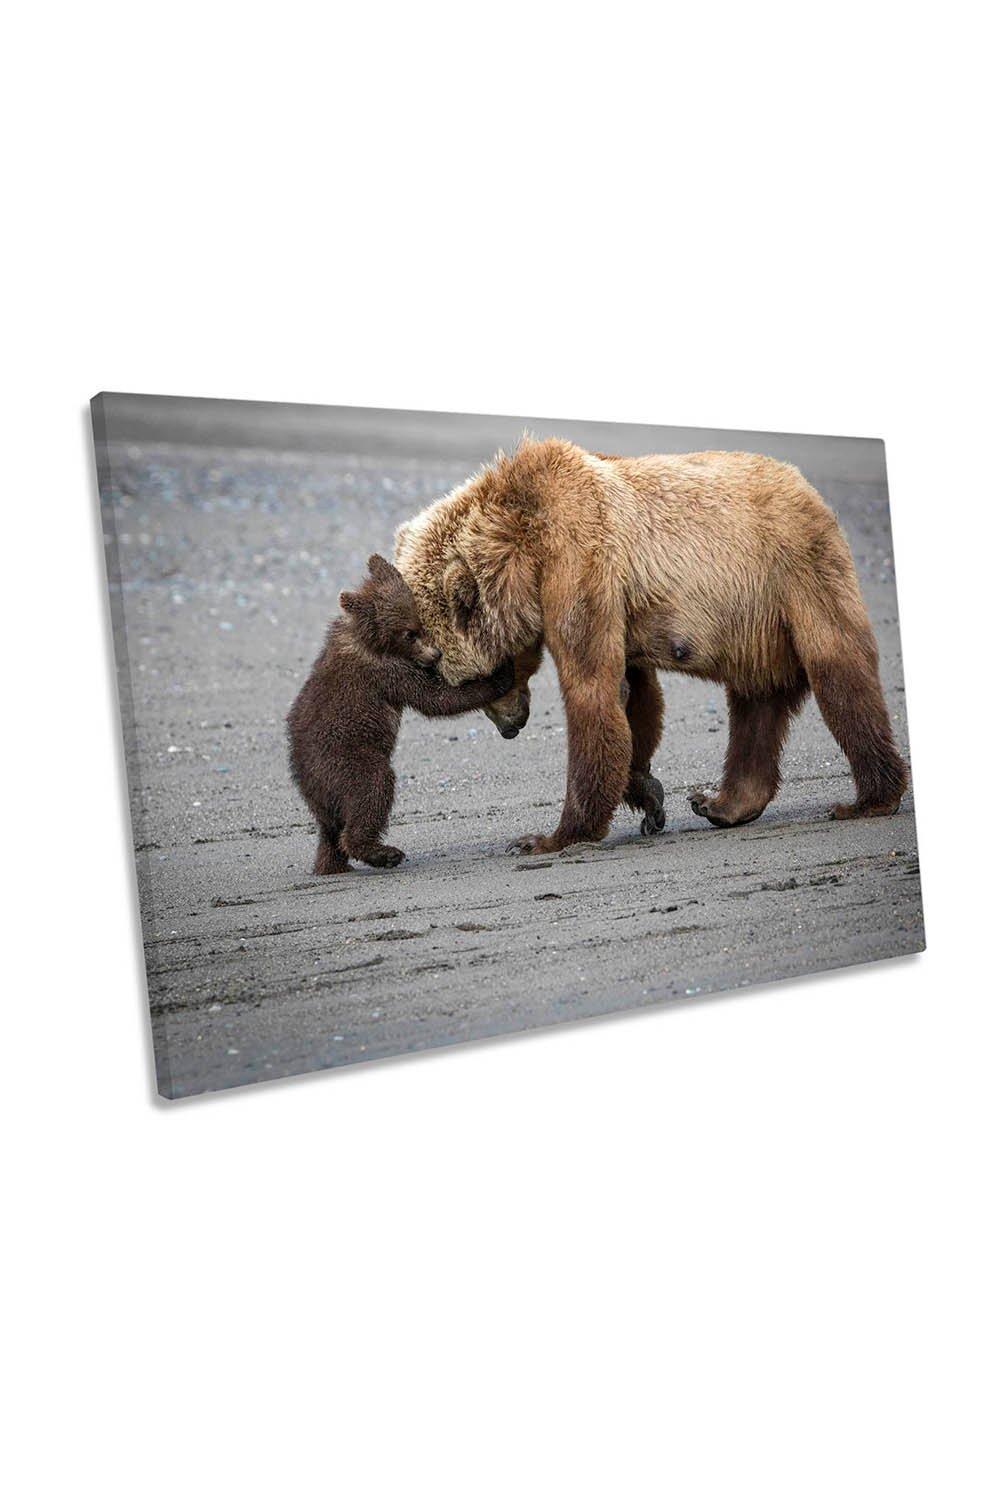 A Little Bear Hug Family Love Canvas Wall Art Picture Print